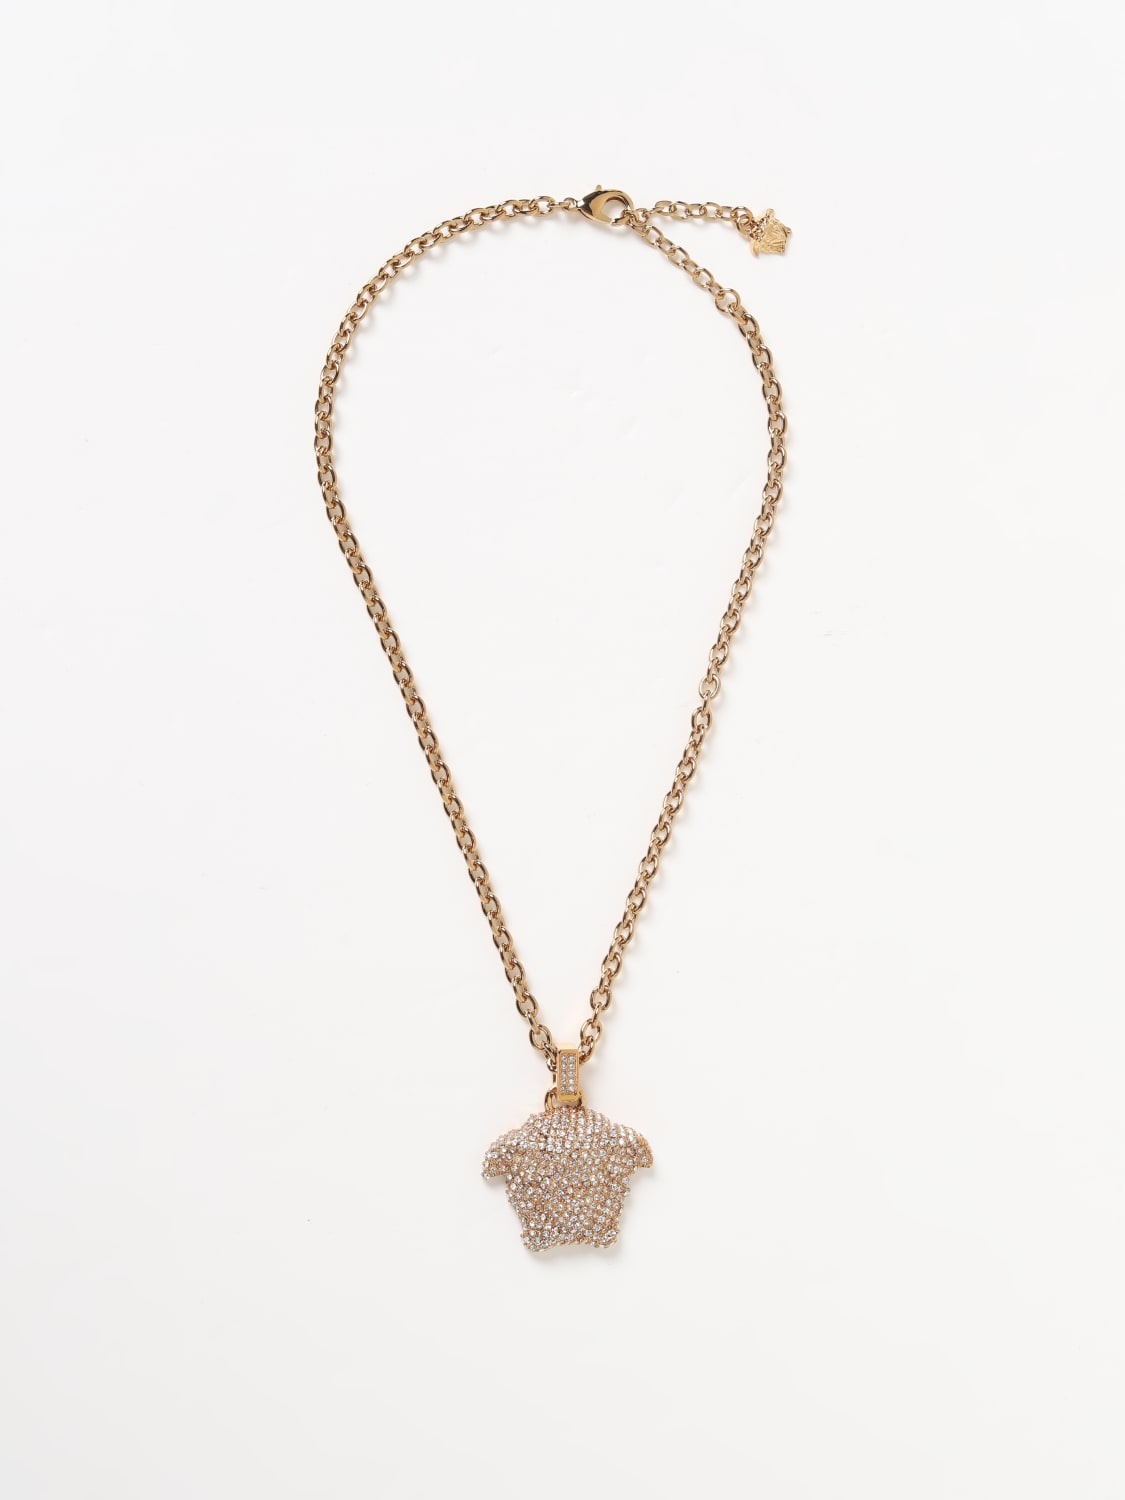 Versace brass necklace with rhinestone Medusa - 1